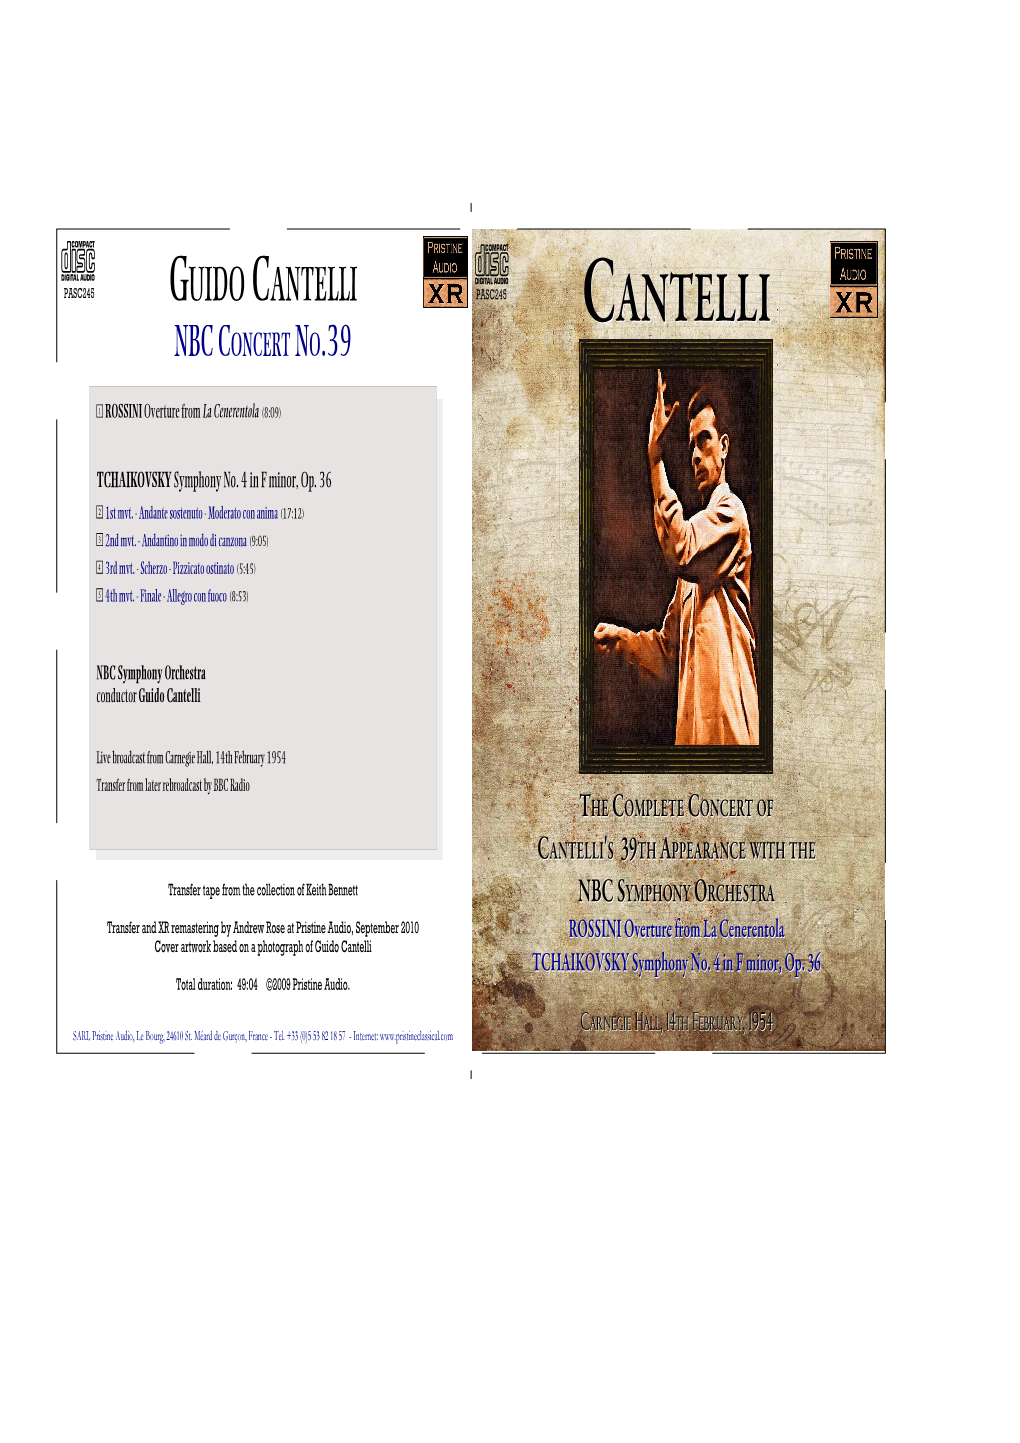 Cantelli Pasc245 Antelli Nbc Concert No.39 Cantelli